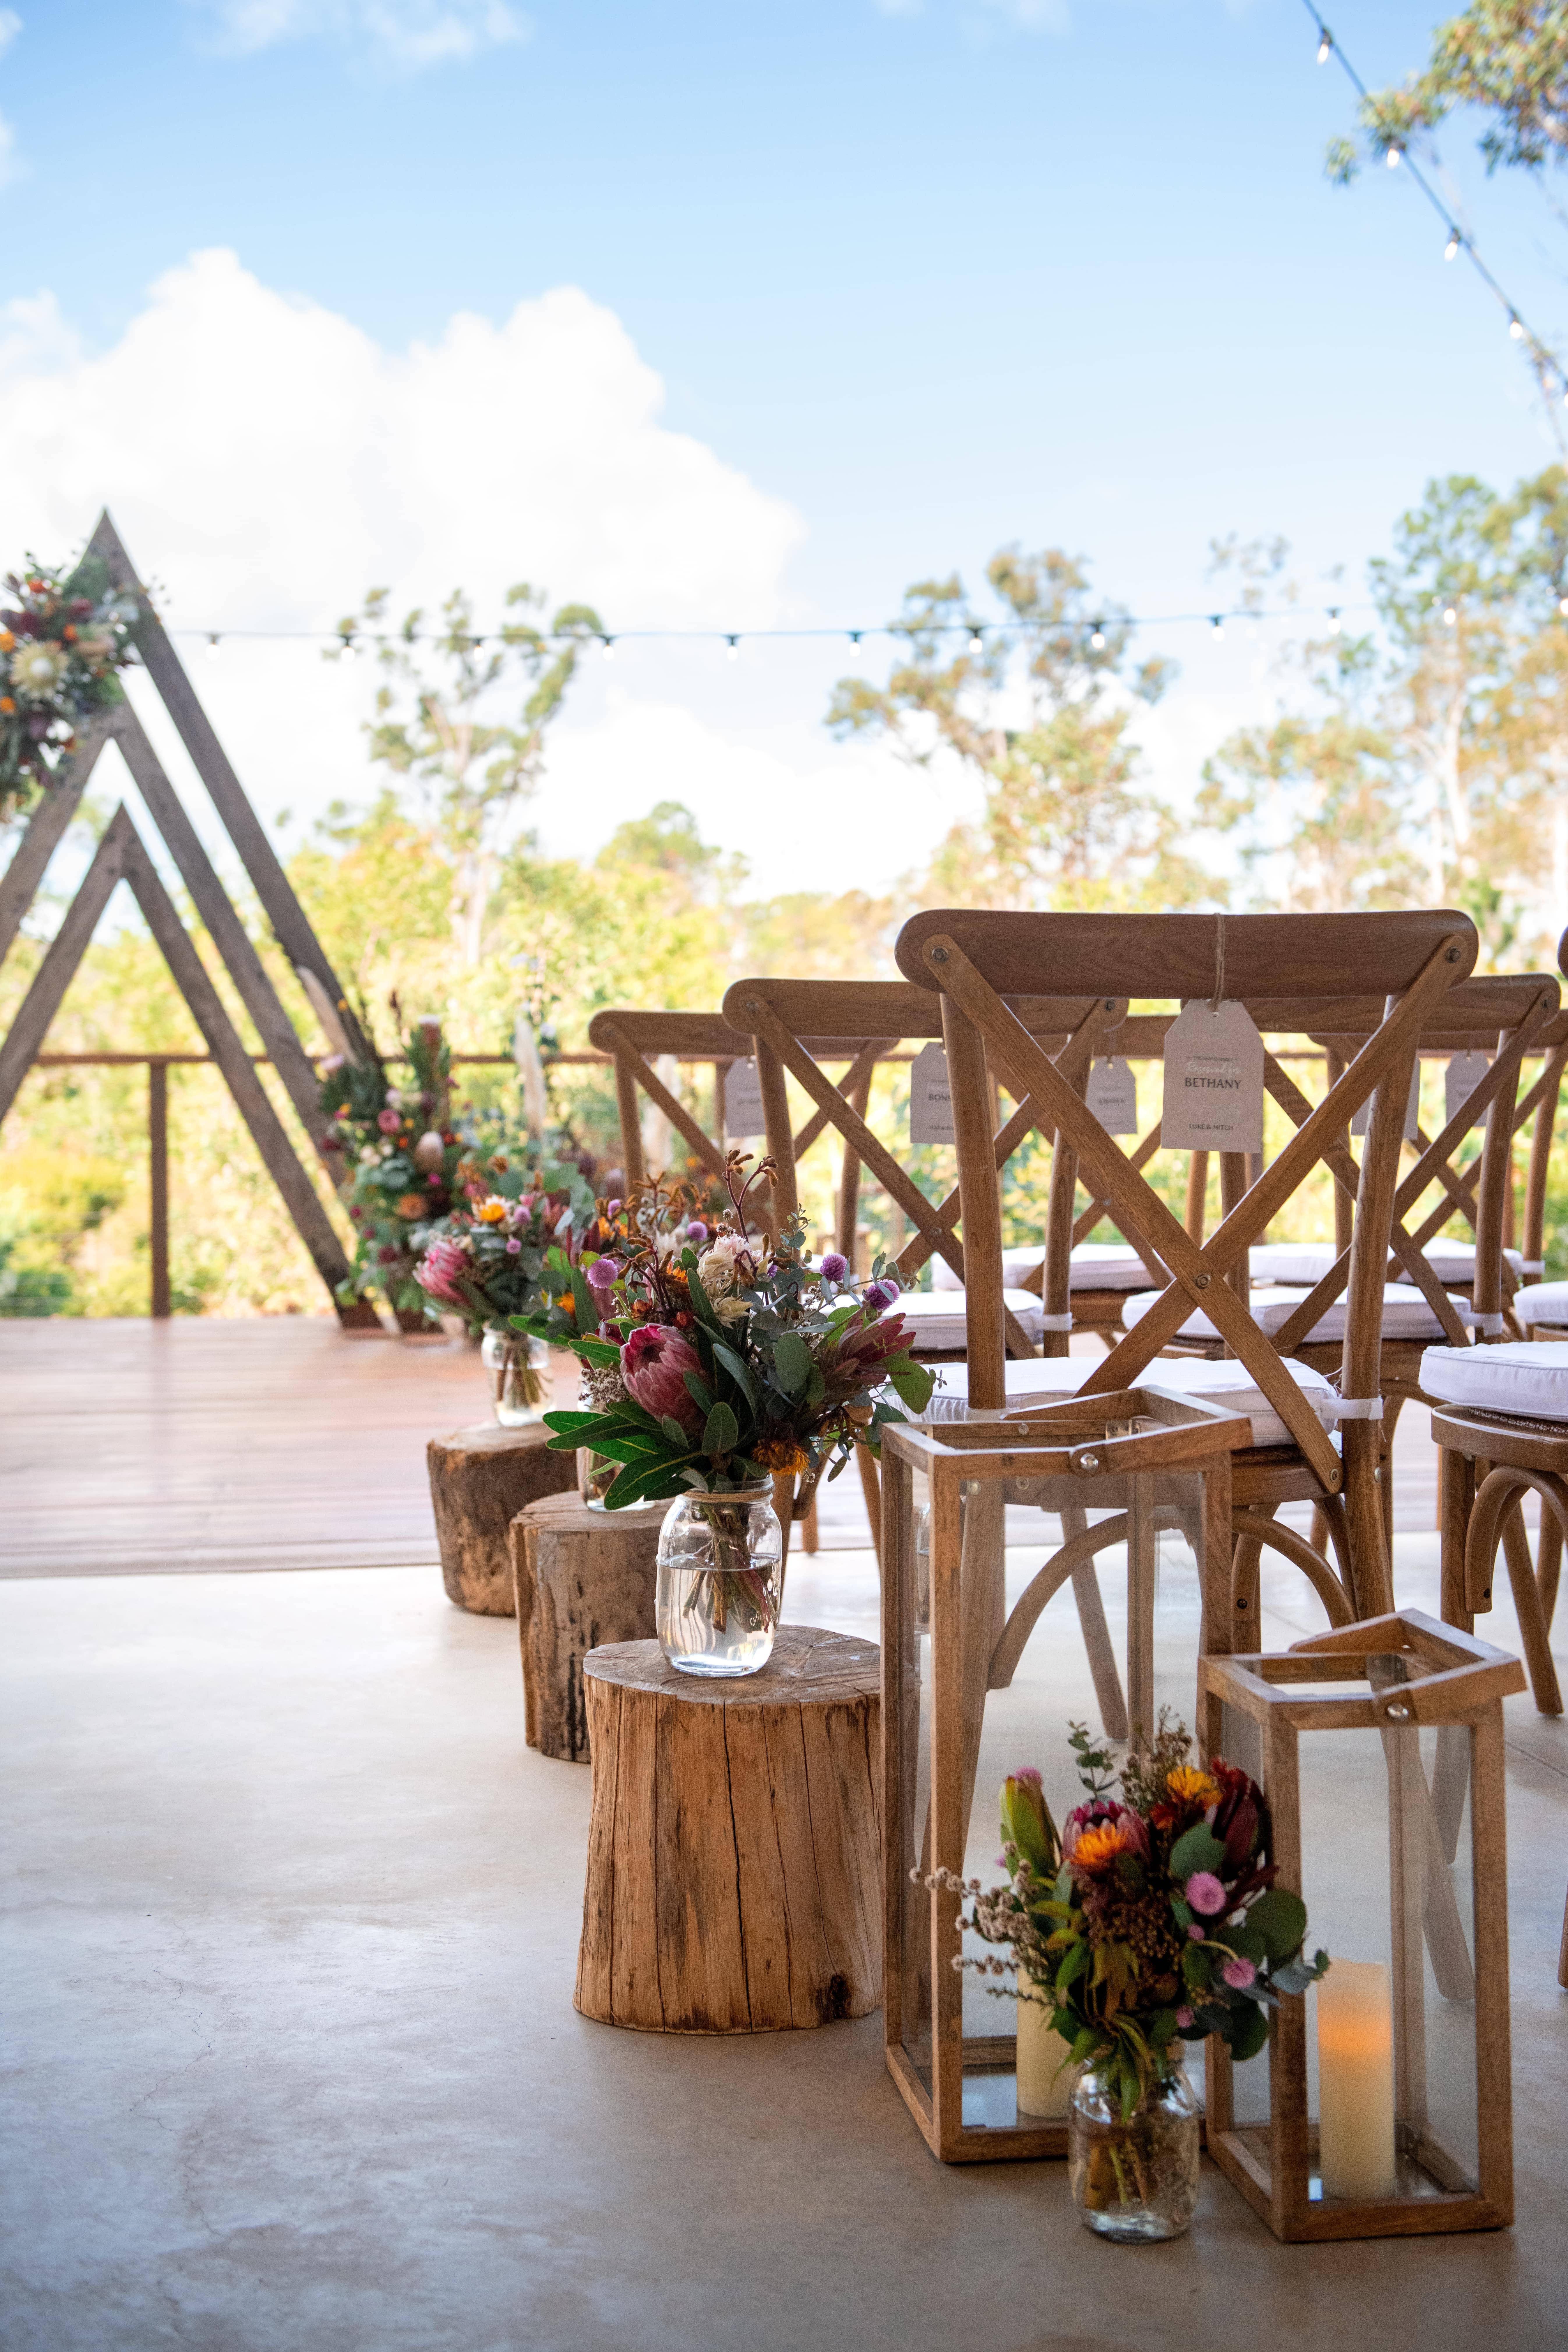 Real-wedding-Luke-and-Mitch-at-The-Crocodile-Lodge-Australia-Zoo-Queensland-wedding-venue-chairs